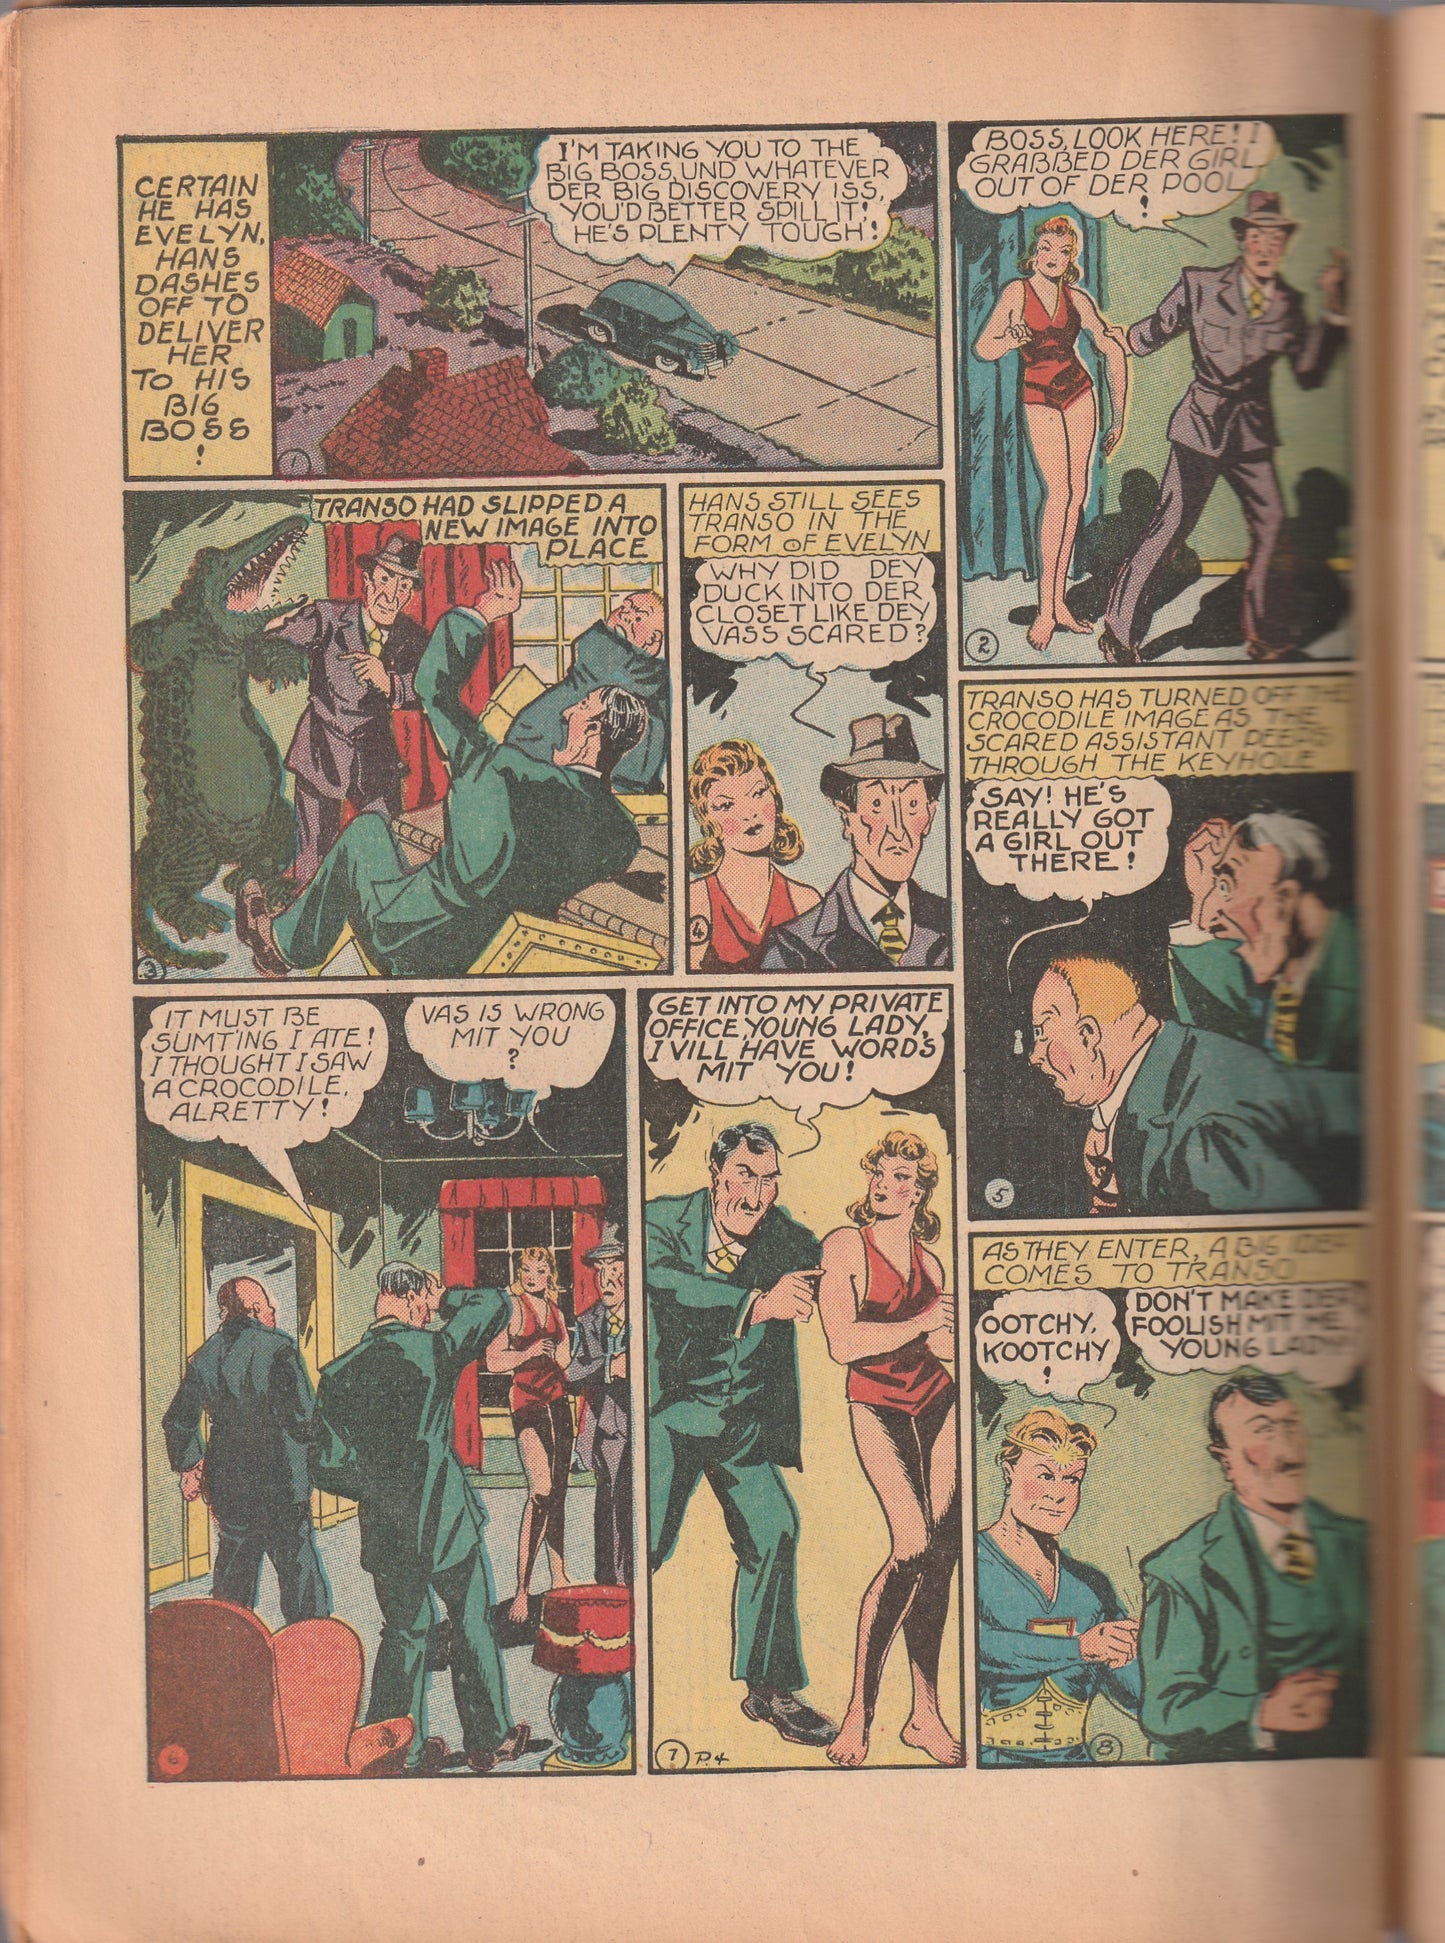 Super Magician Vol 1 #4 (1942) - Origin Transo